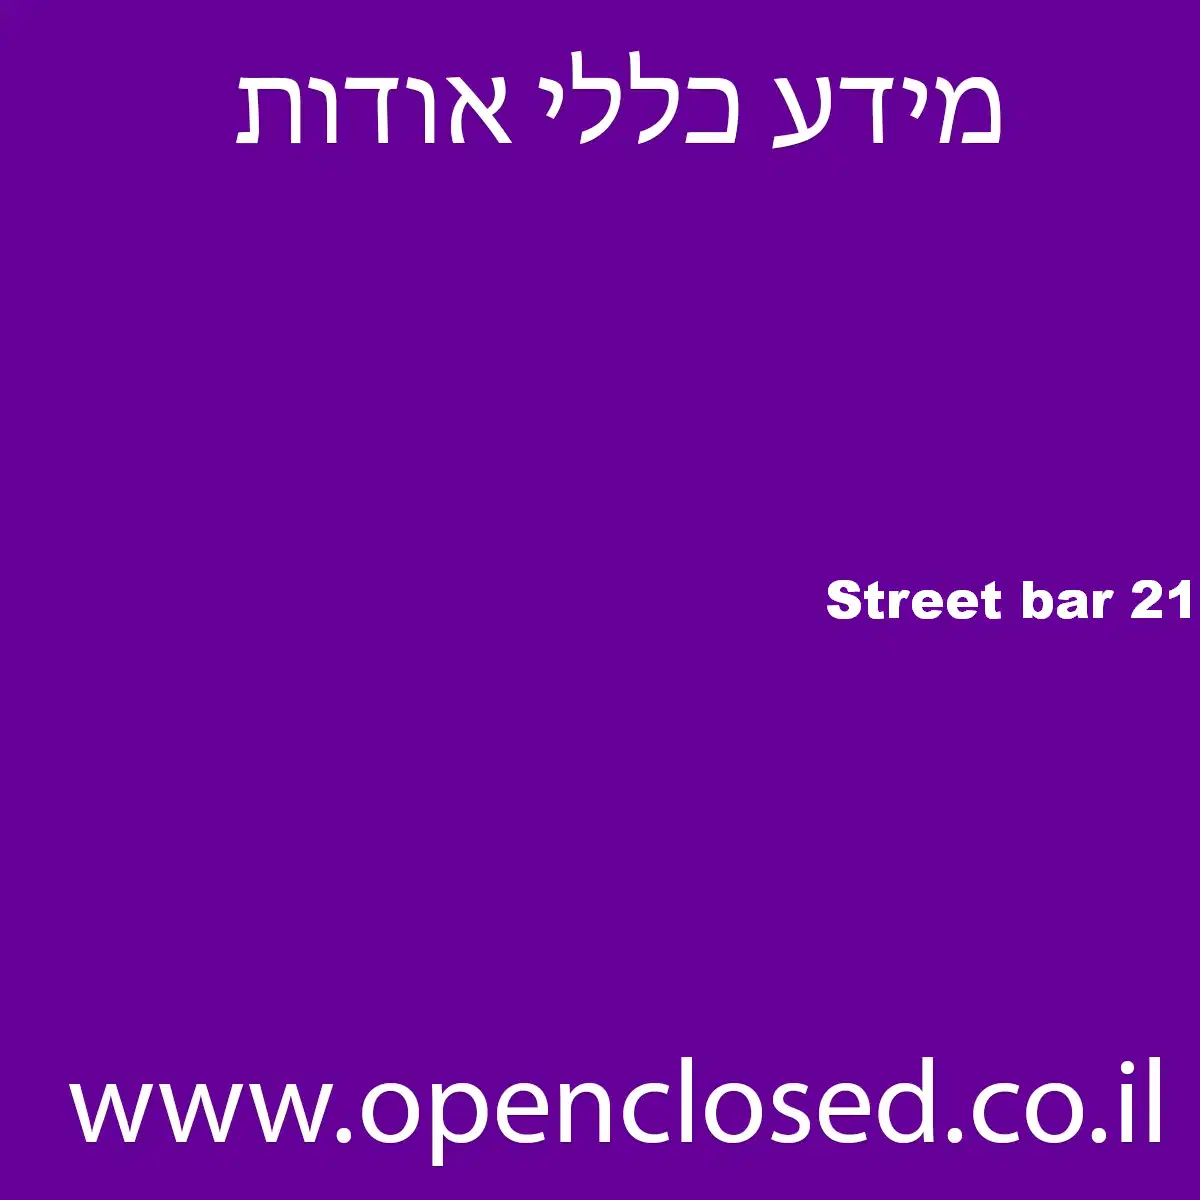 Street bar 21